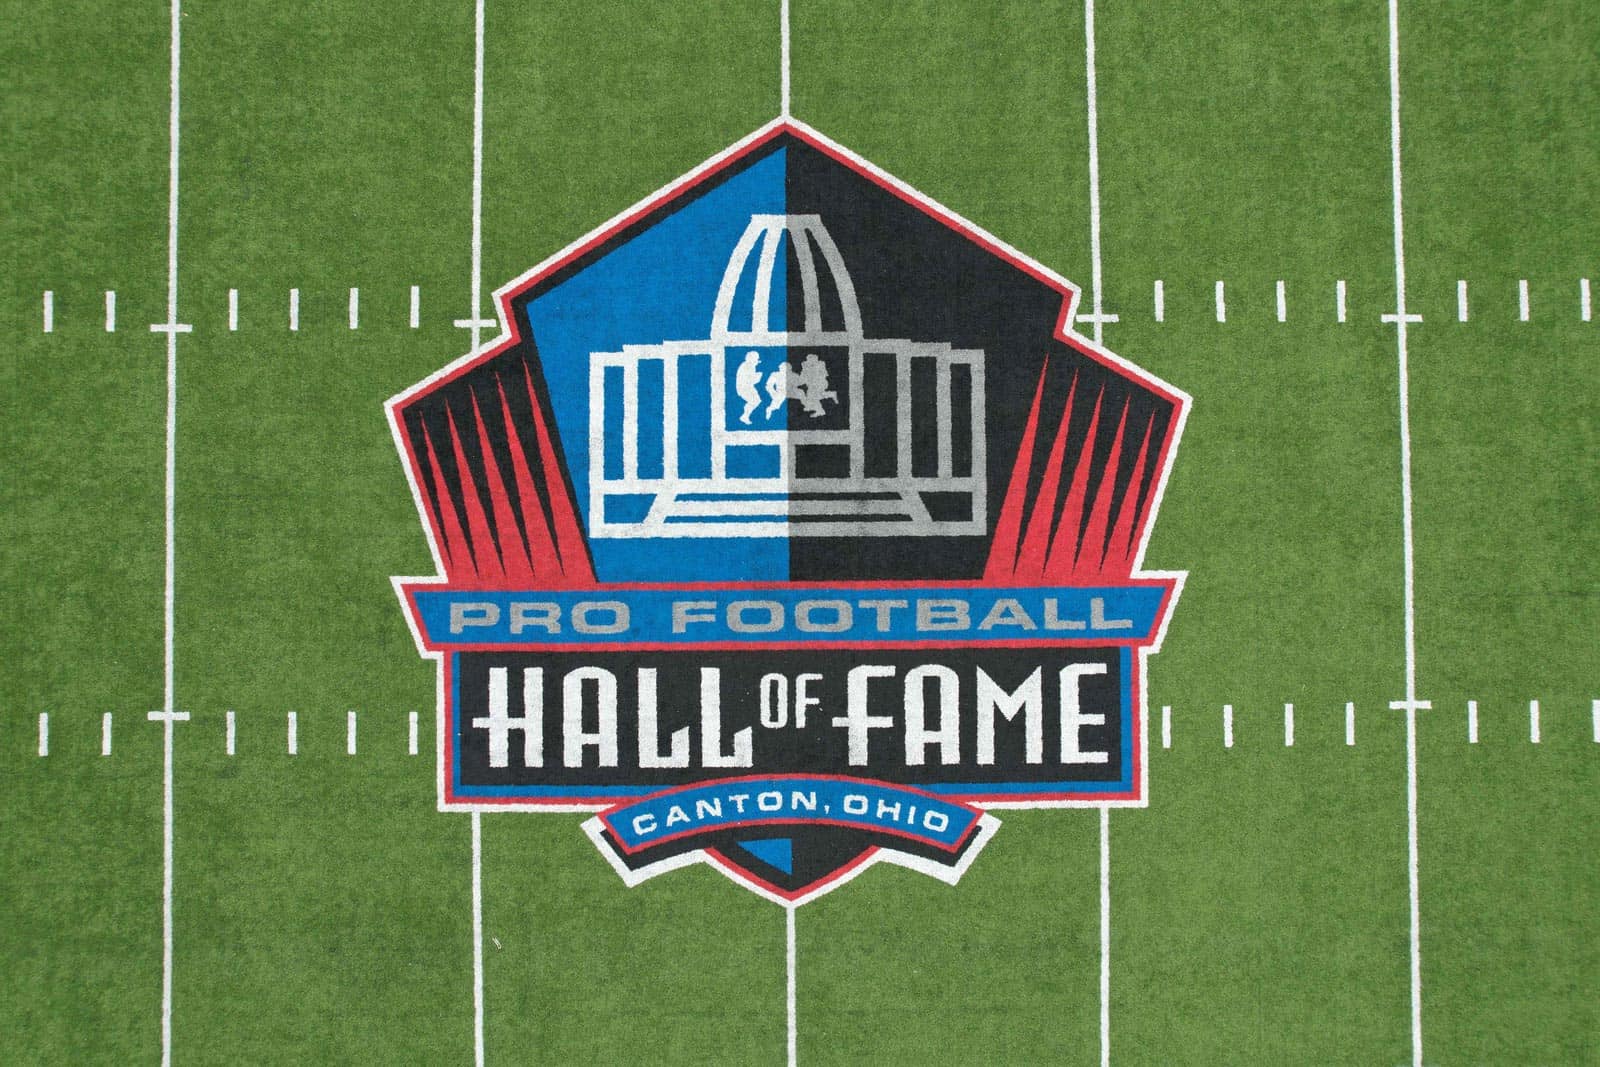 NFL/Hall of Fame Game